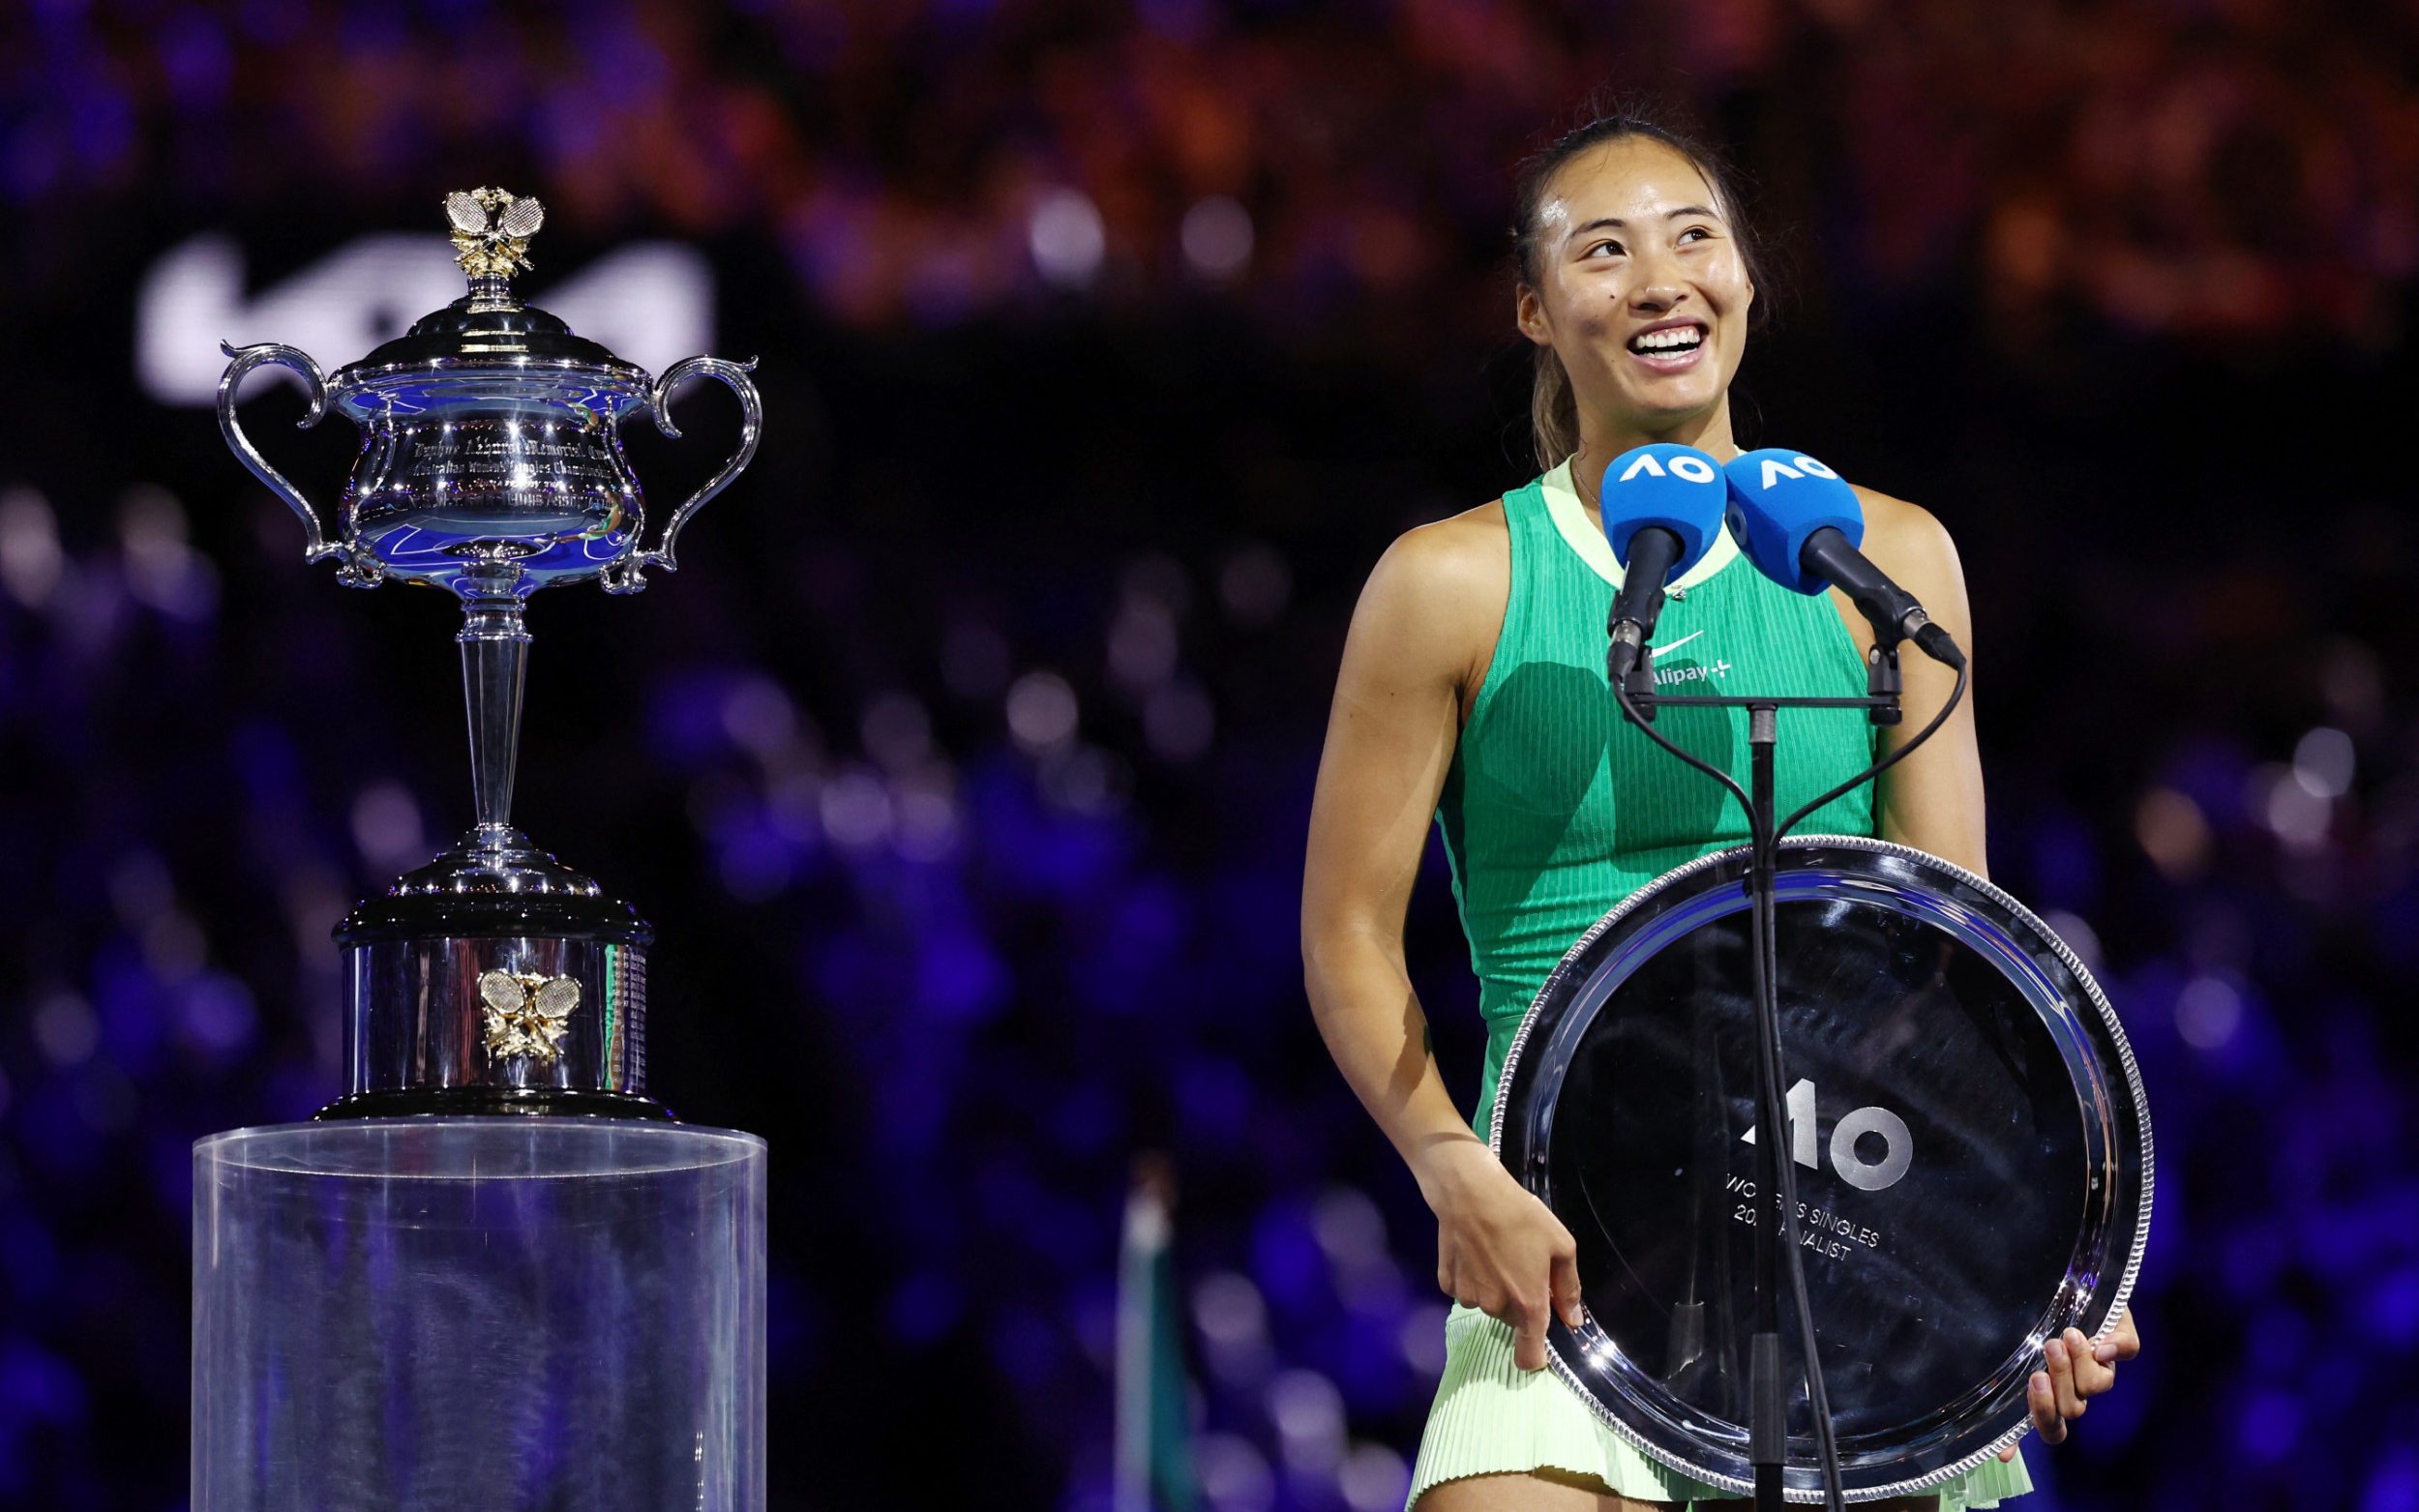 aryna sabalenka overwhelms qinwen zheng to win back-to-back australian open titles